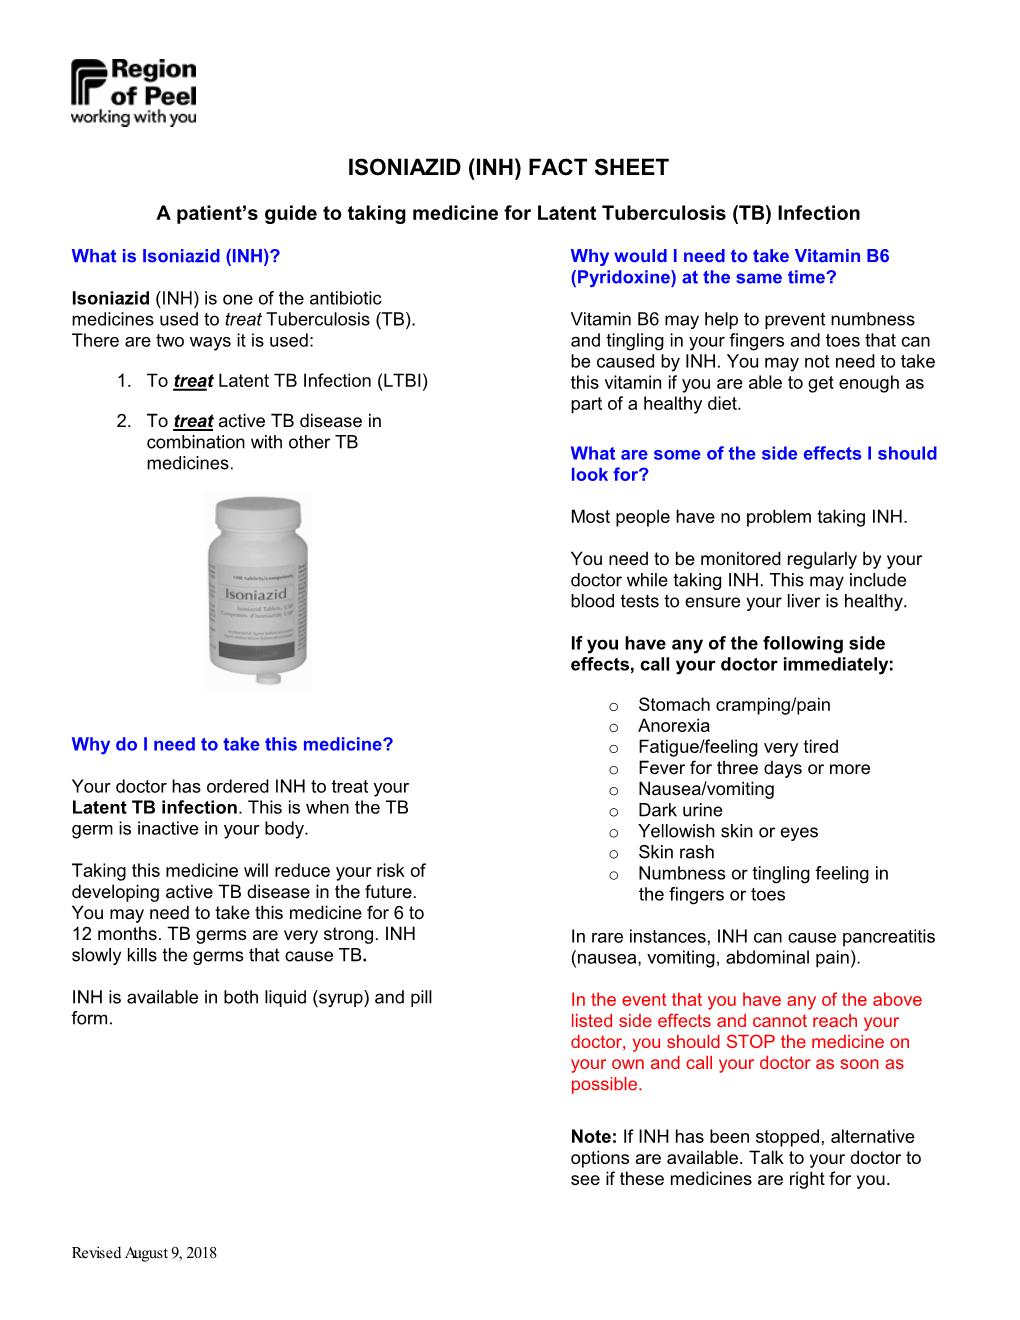 Isoniazid (Inh) Fact Sheet